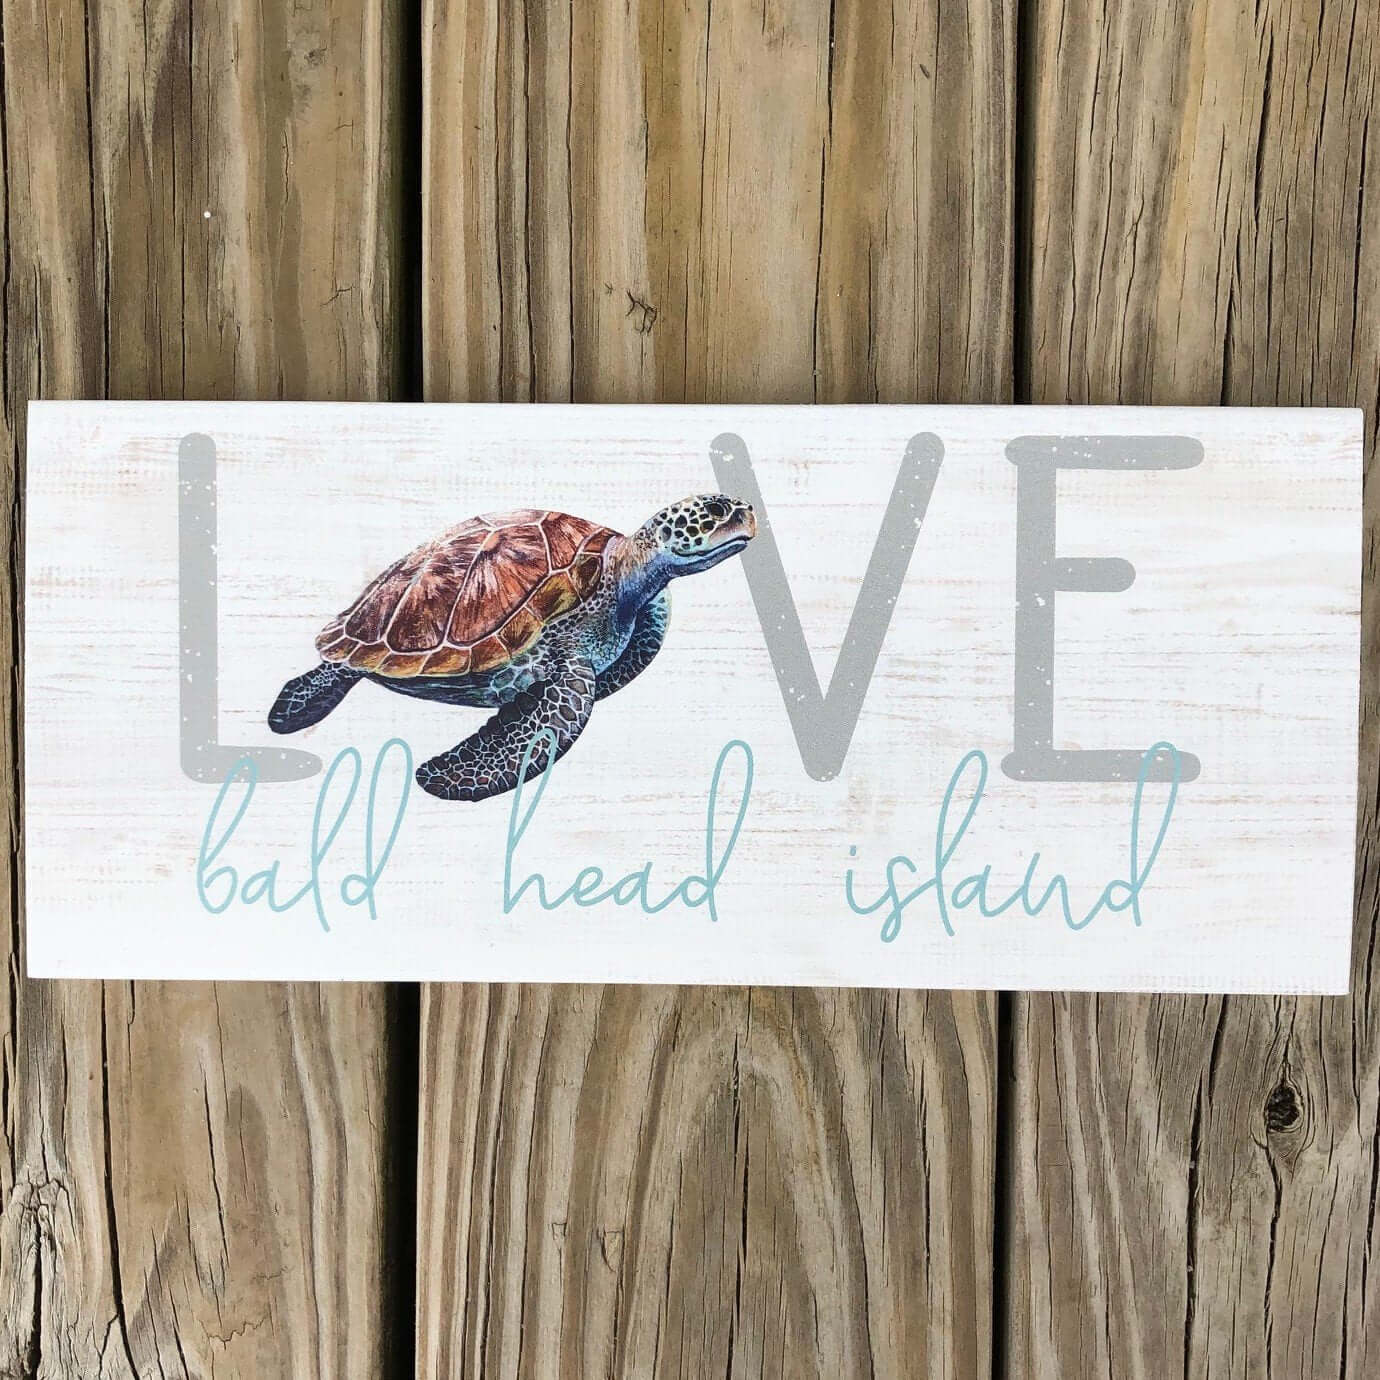 Sea Turtles 22 oz Travel Mug by Swig Life – Turtle Central Gift Shop